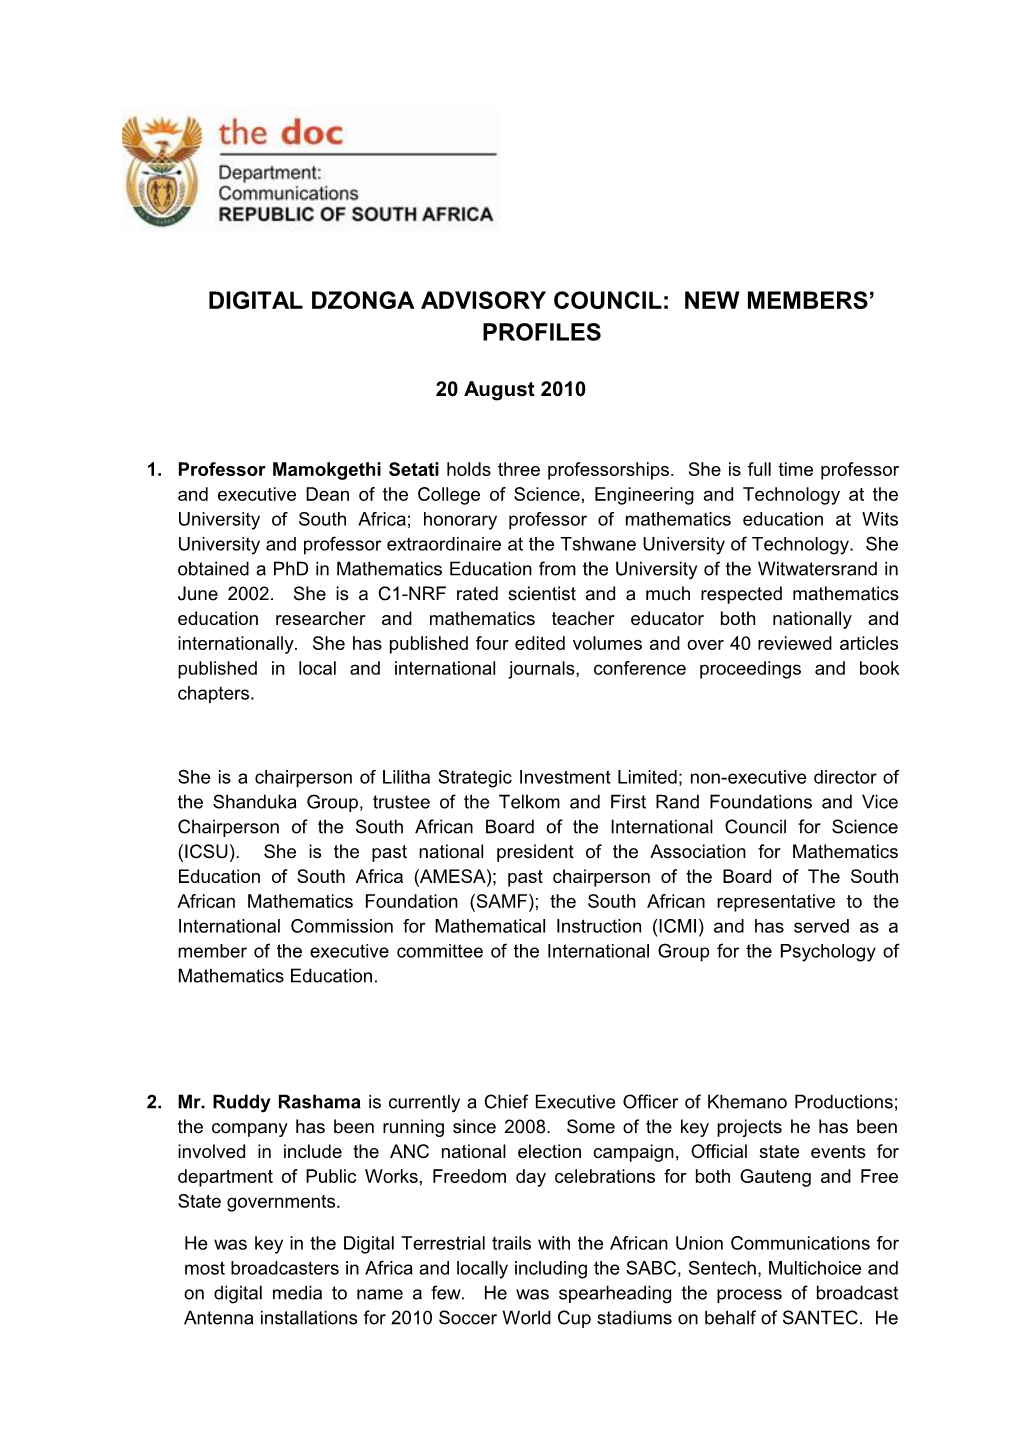 Digital Dzonga Advisory Council: New Members Profiles